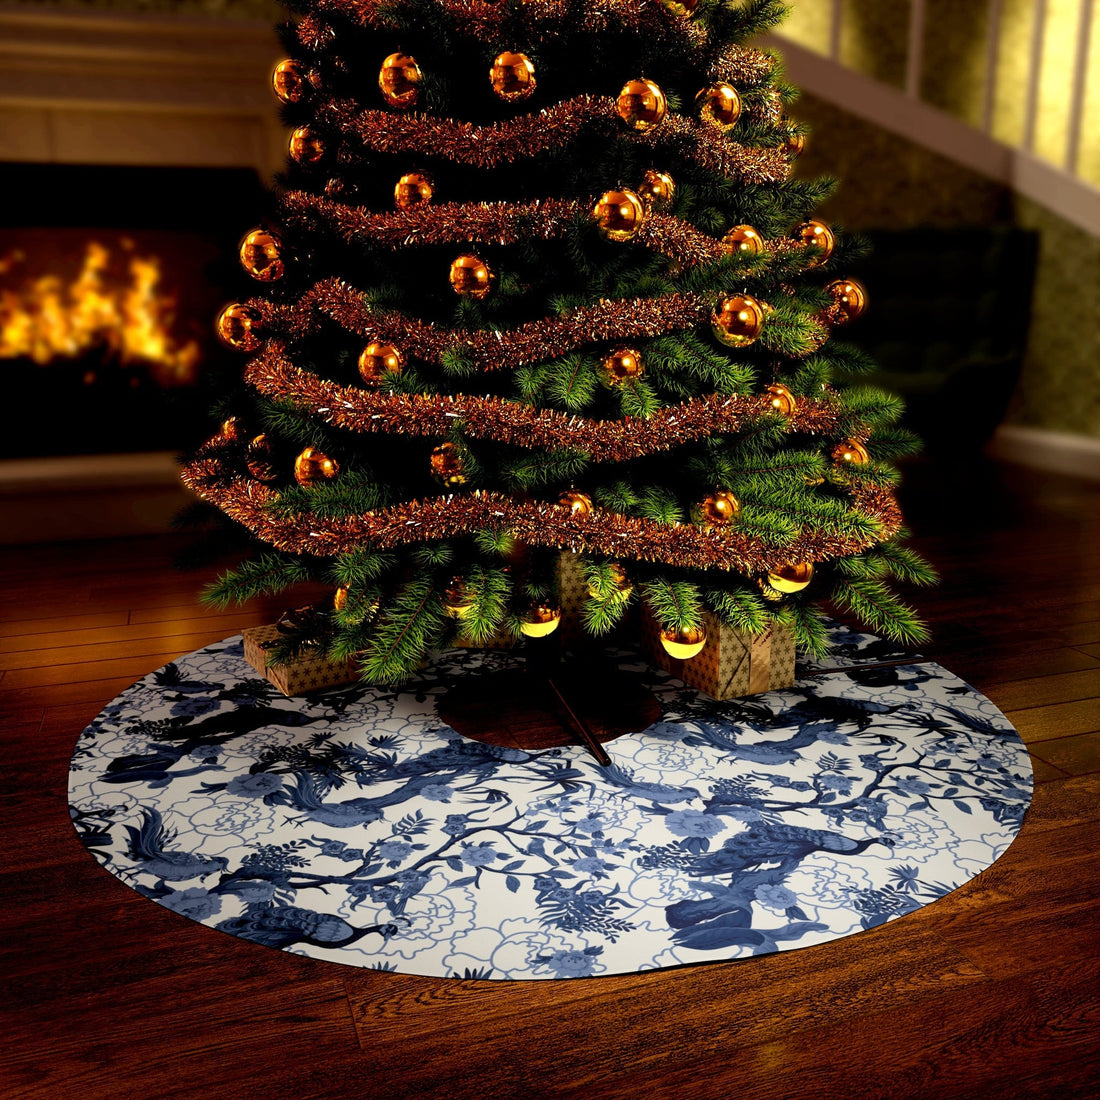 Kate McEnroe New York Chinoiserie Peacock Tree Skirt, Luxury Blue and White Christmas Decor, Elegant Holiday Tree Base, Festive Seasonal AccentChristmas Tree Skirts27634234604853304310